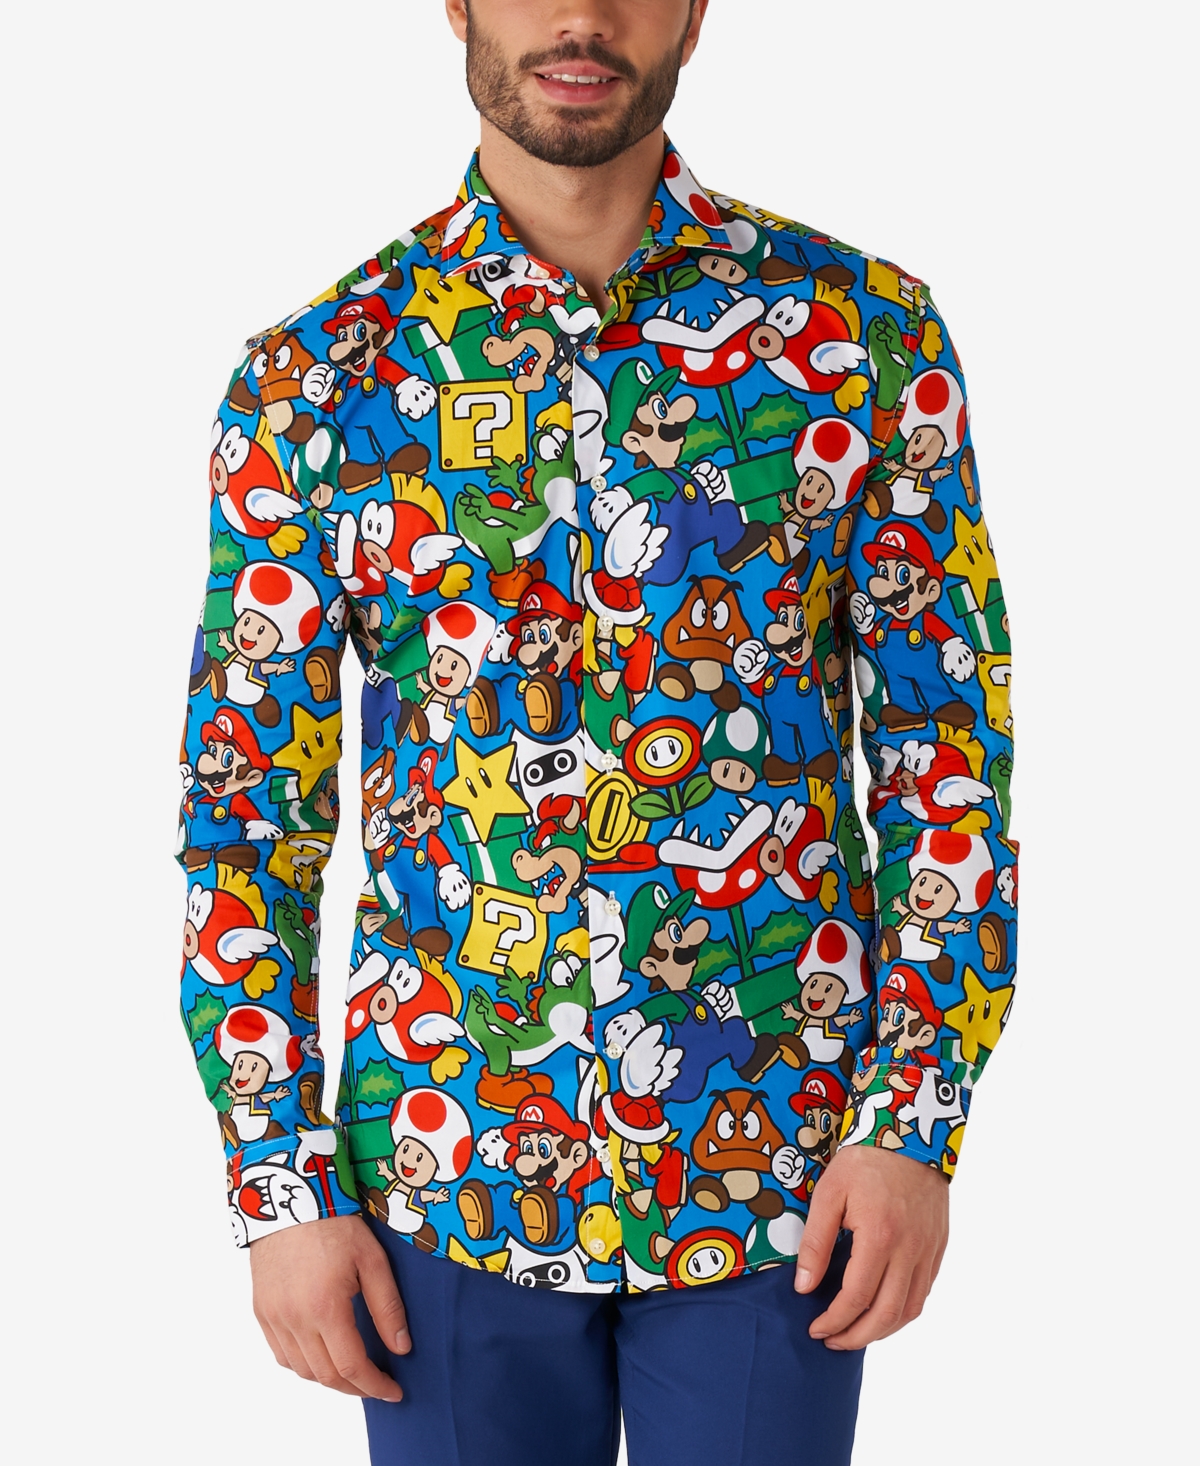 Men's Super Mario Licensed Nintendo Dress Shirt - Assorted